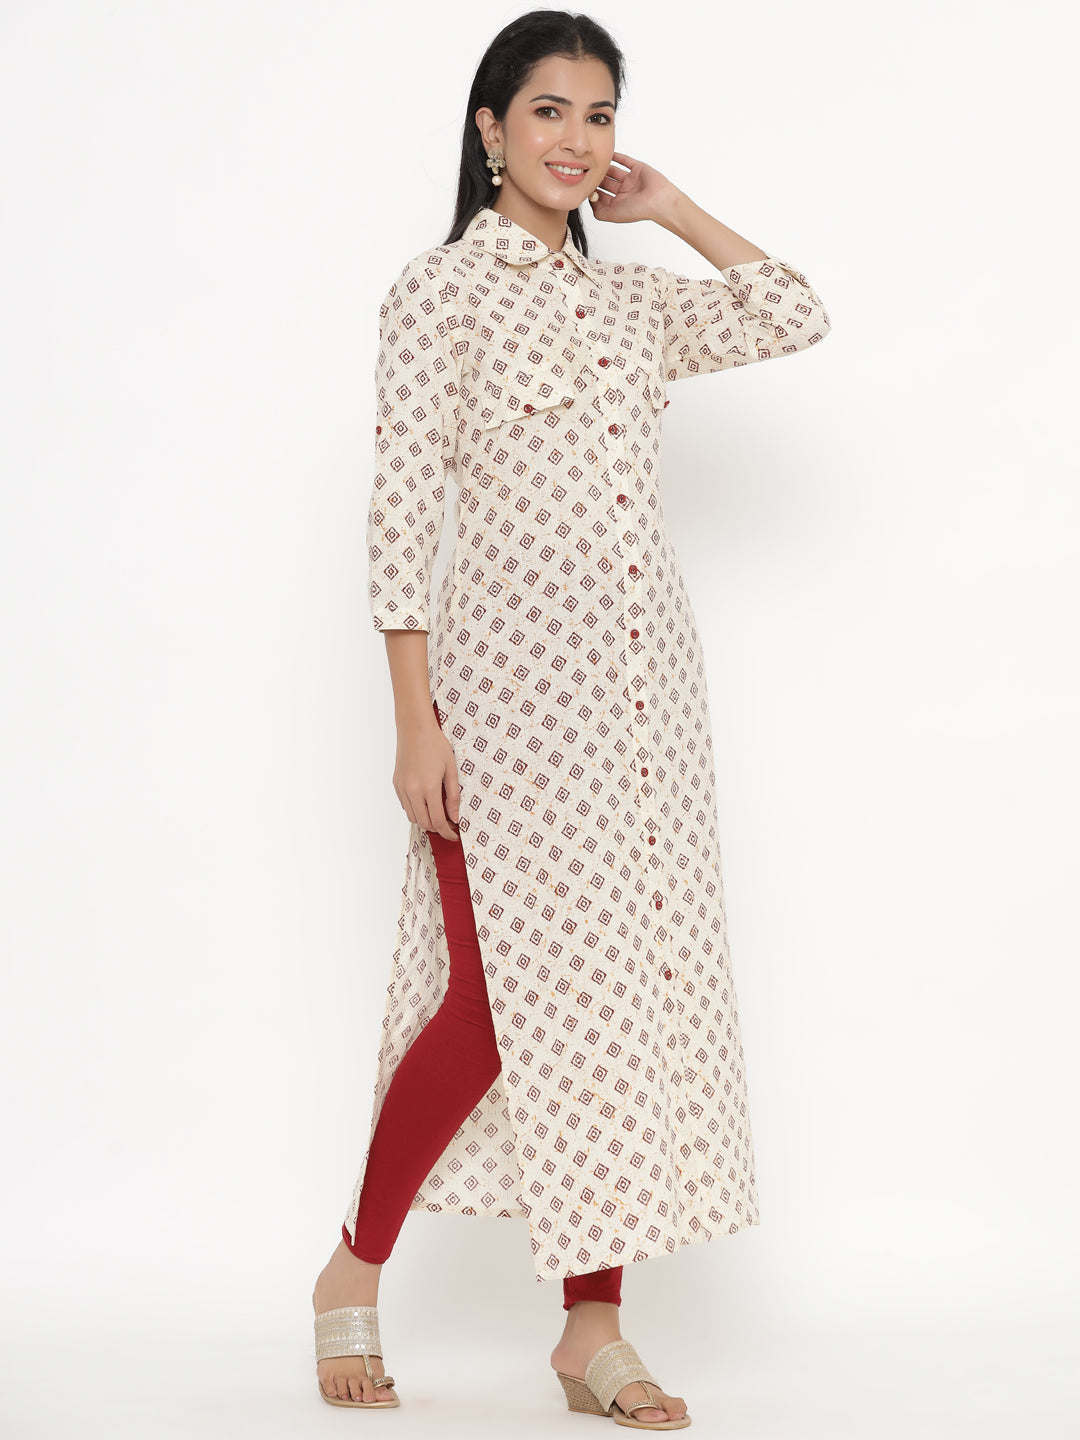 Women's Self Desgin Cotton Fabric A-Line Kurta Off-White Color - Kipek